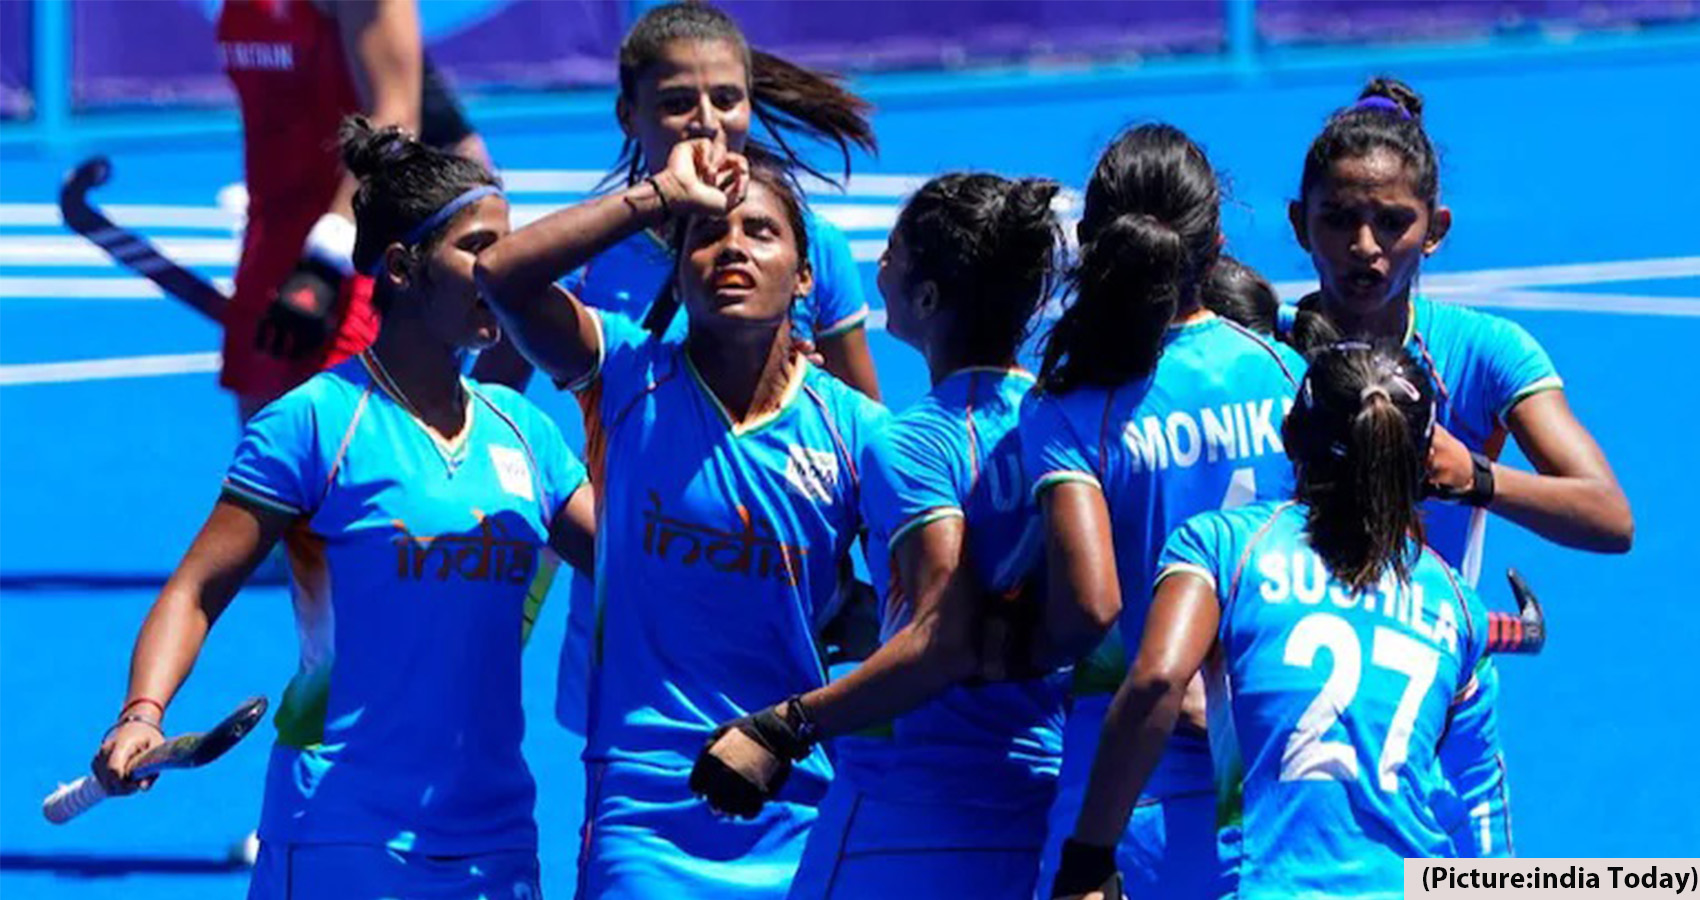 India’s Women’s Hockey Team Lost, But Creates History